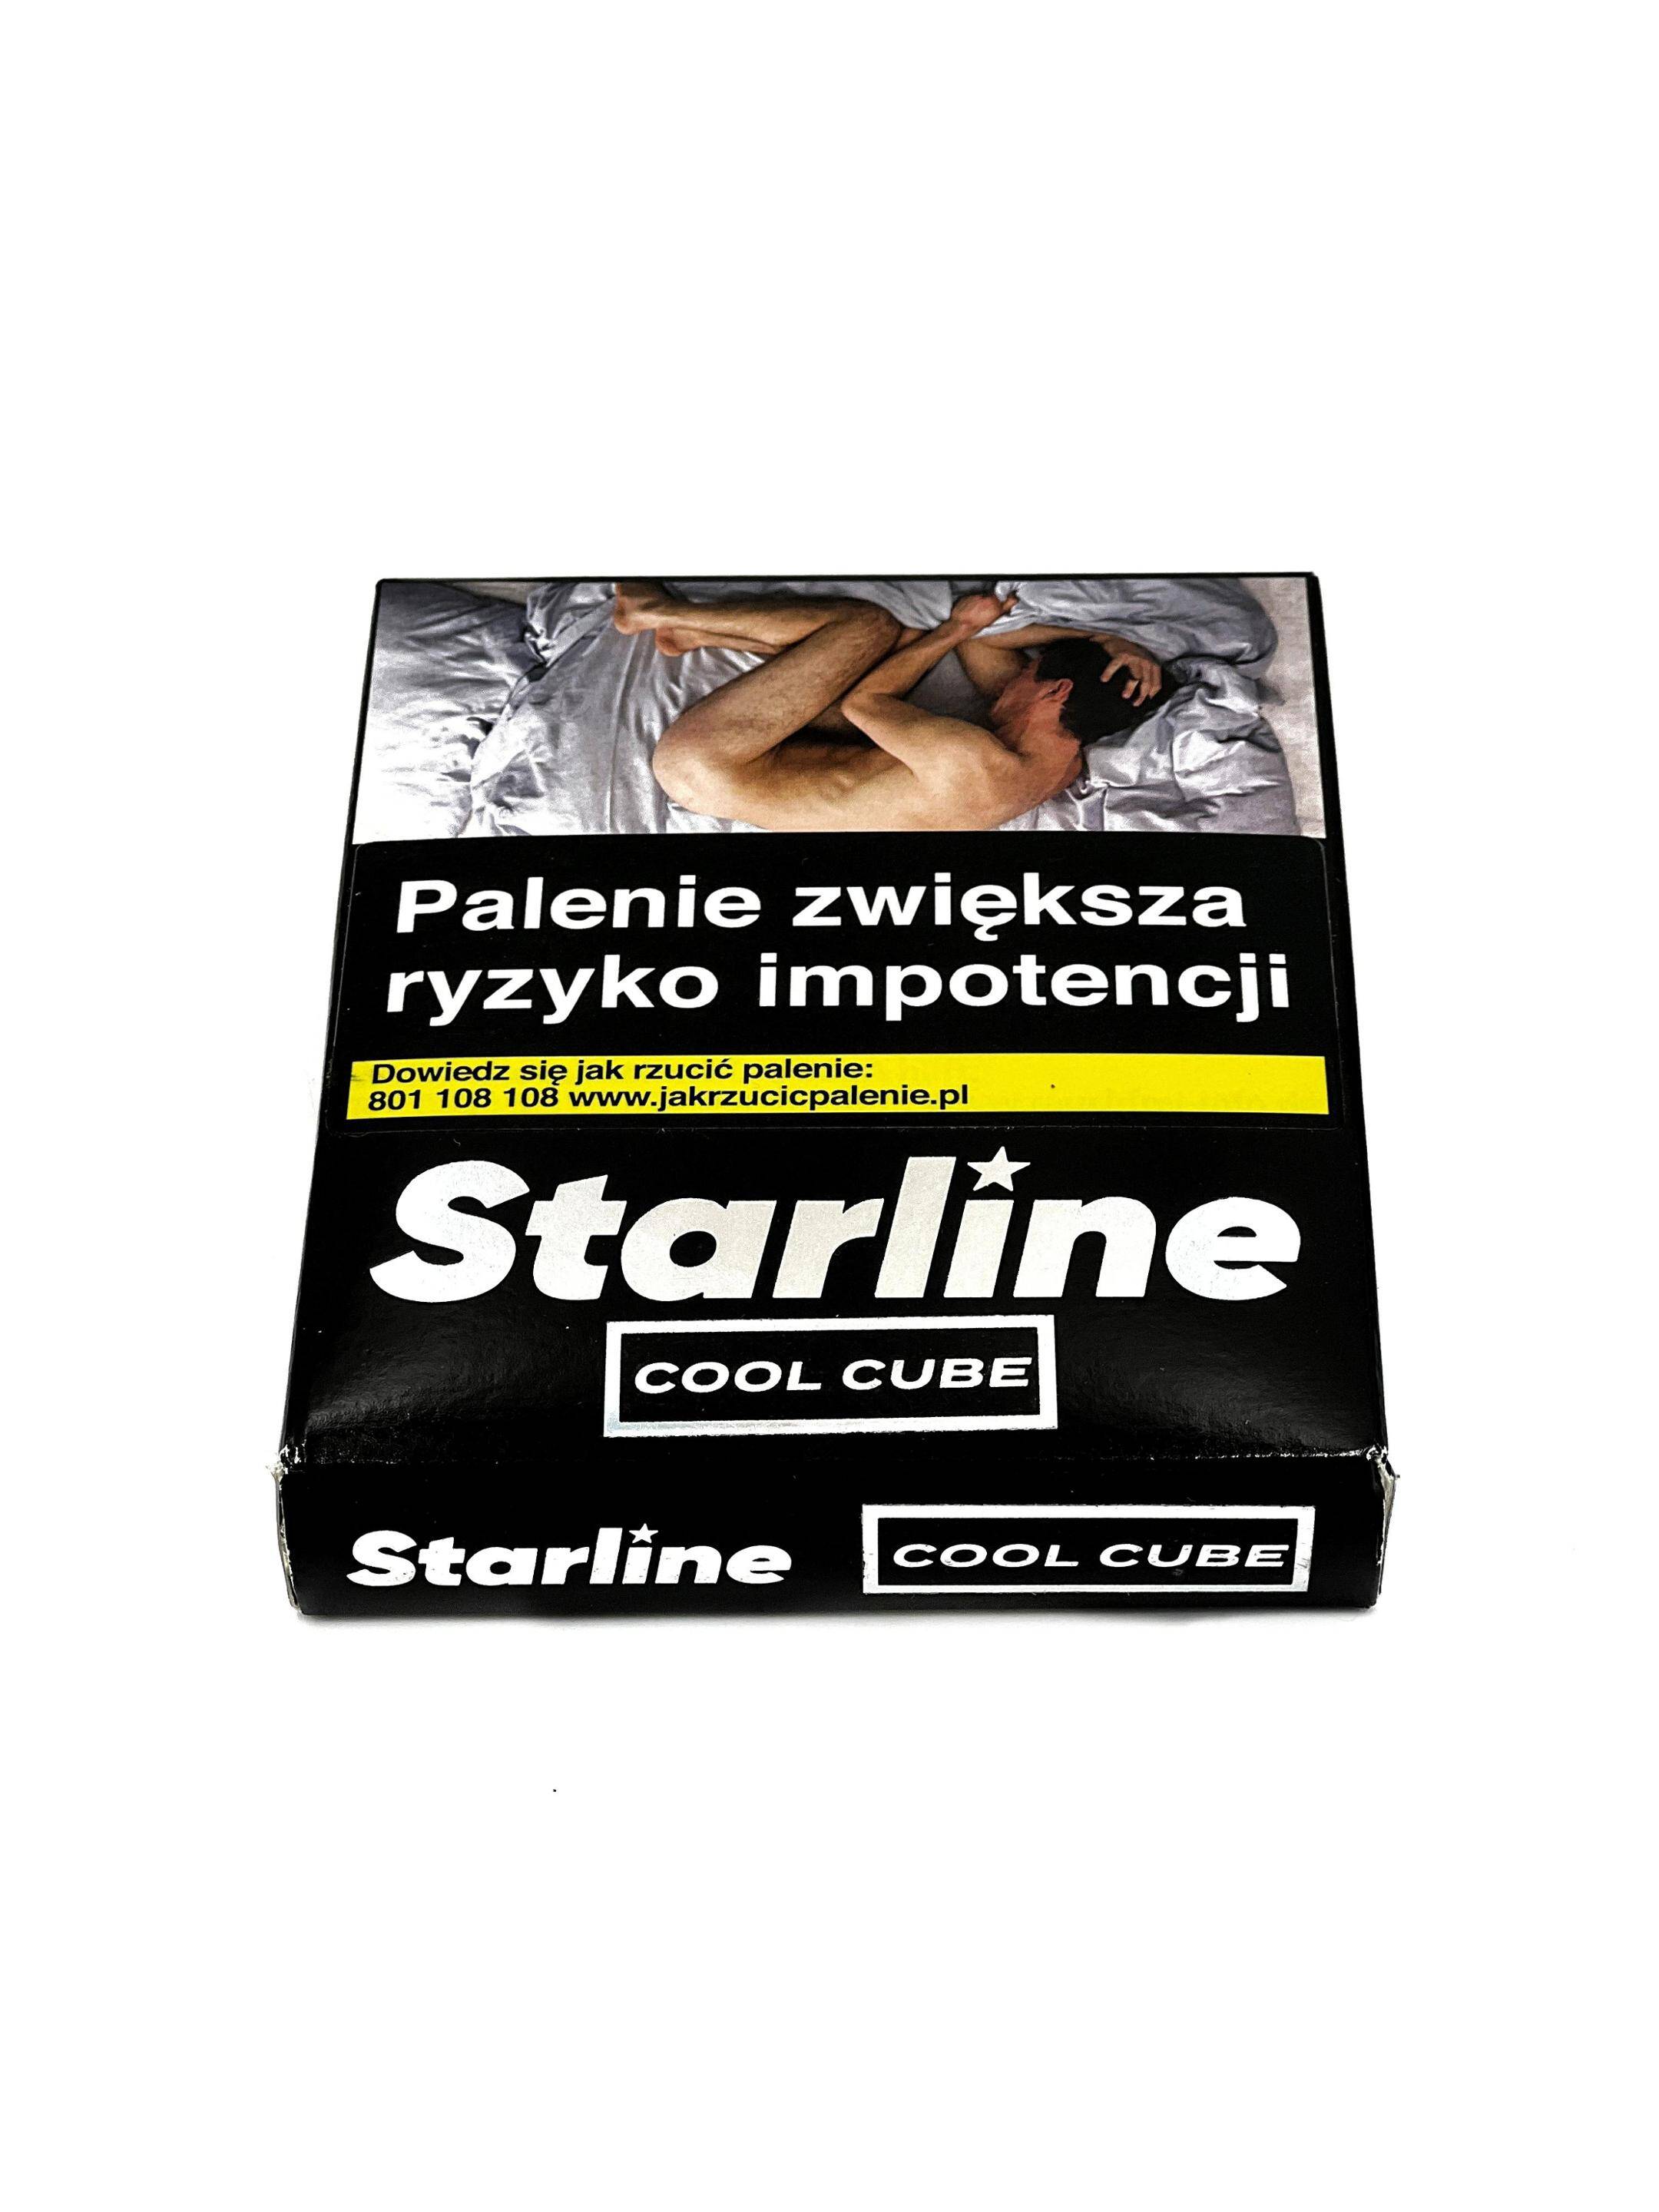 Tobacco STARLINE Cool Cube 200g(160PLN)